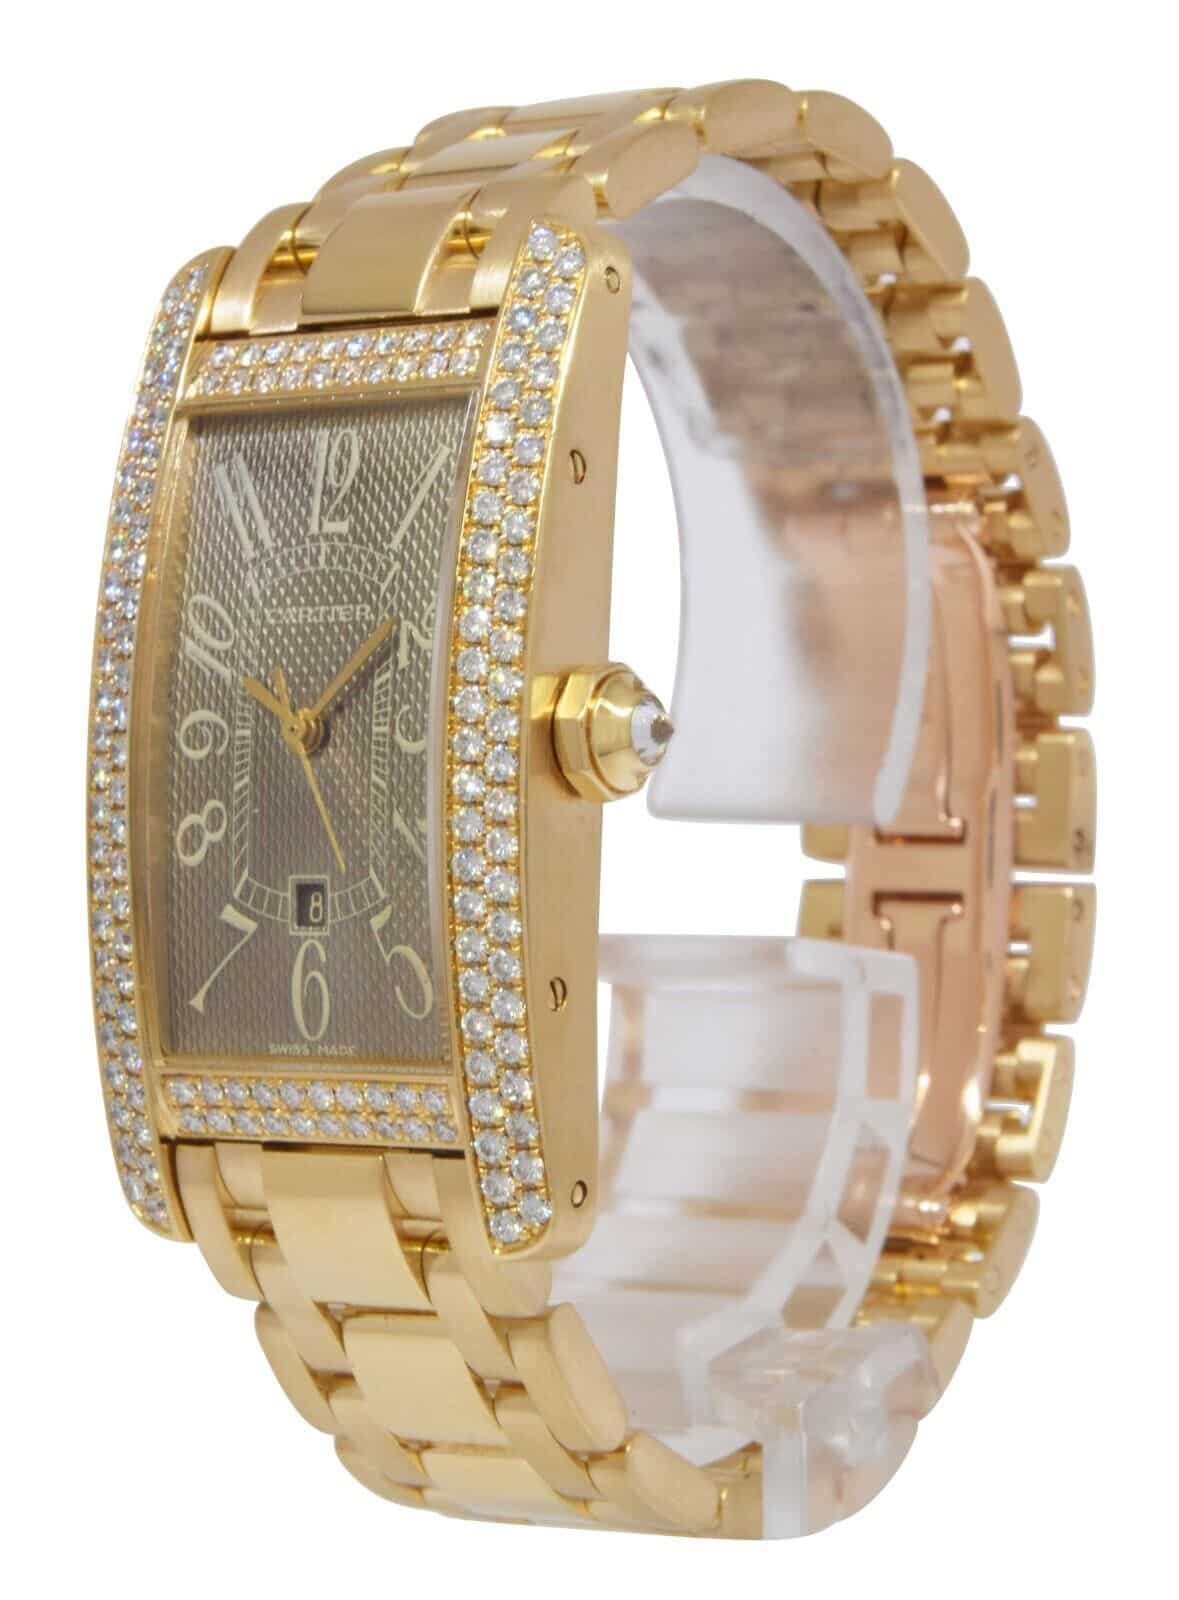 Cartier Tank Americaine 18k Yellow Gold Diamond Automatic Watch WB7057K2 2483